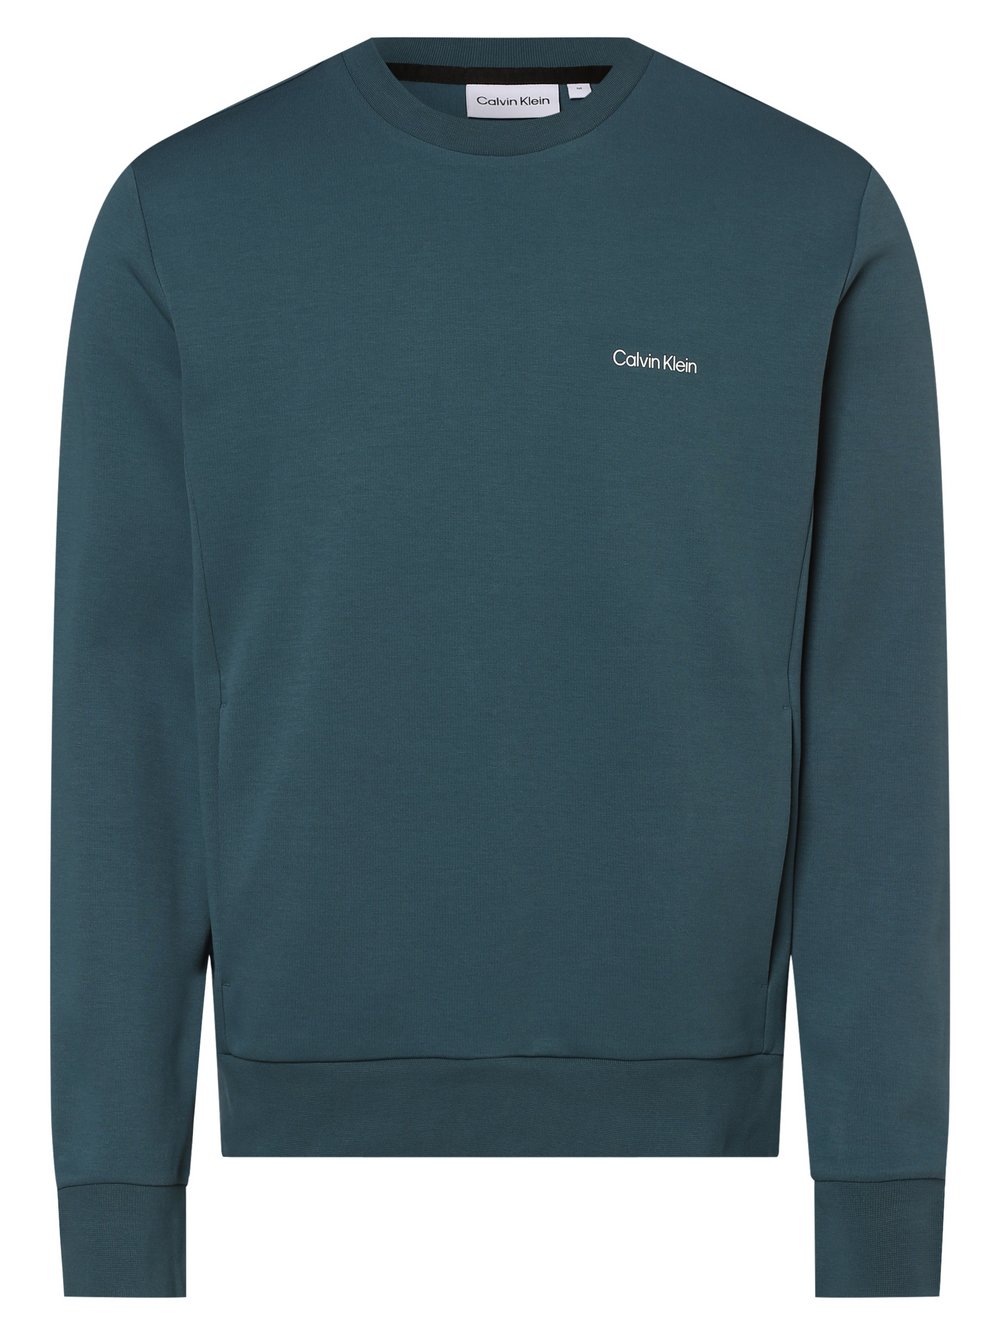 Calvin Klein - Męska bluza nierozpinana, niebieski